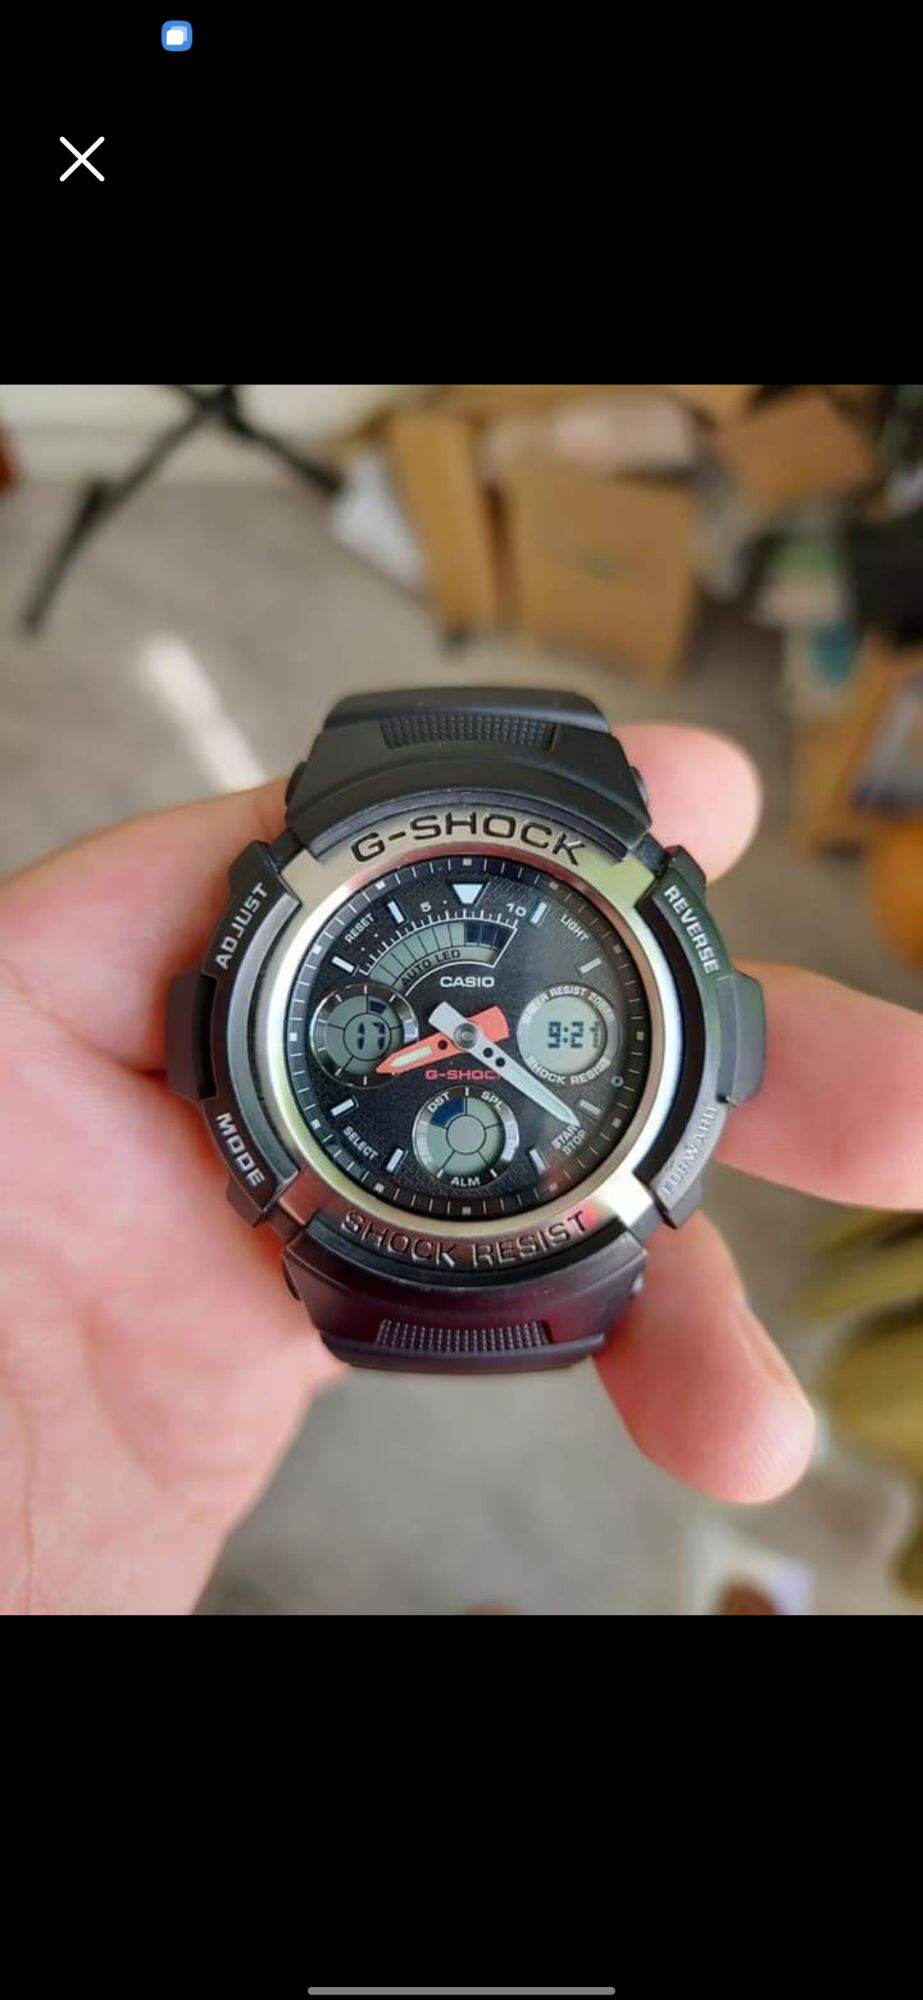 Đồng hồ nam Casio Gshock AW-590, size 45mm, độ mới cao 98%